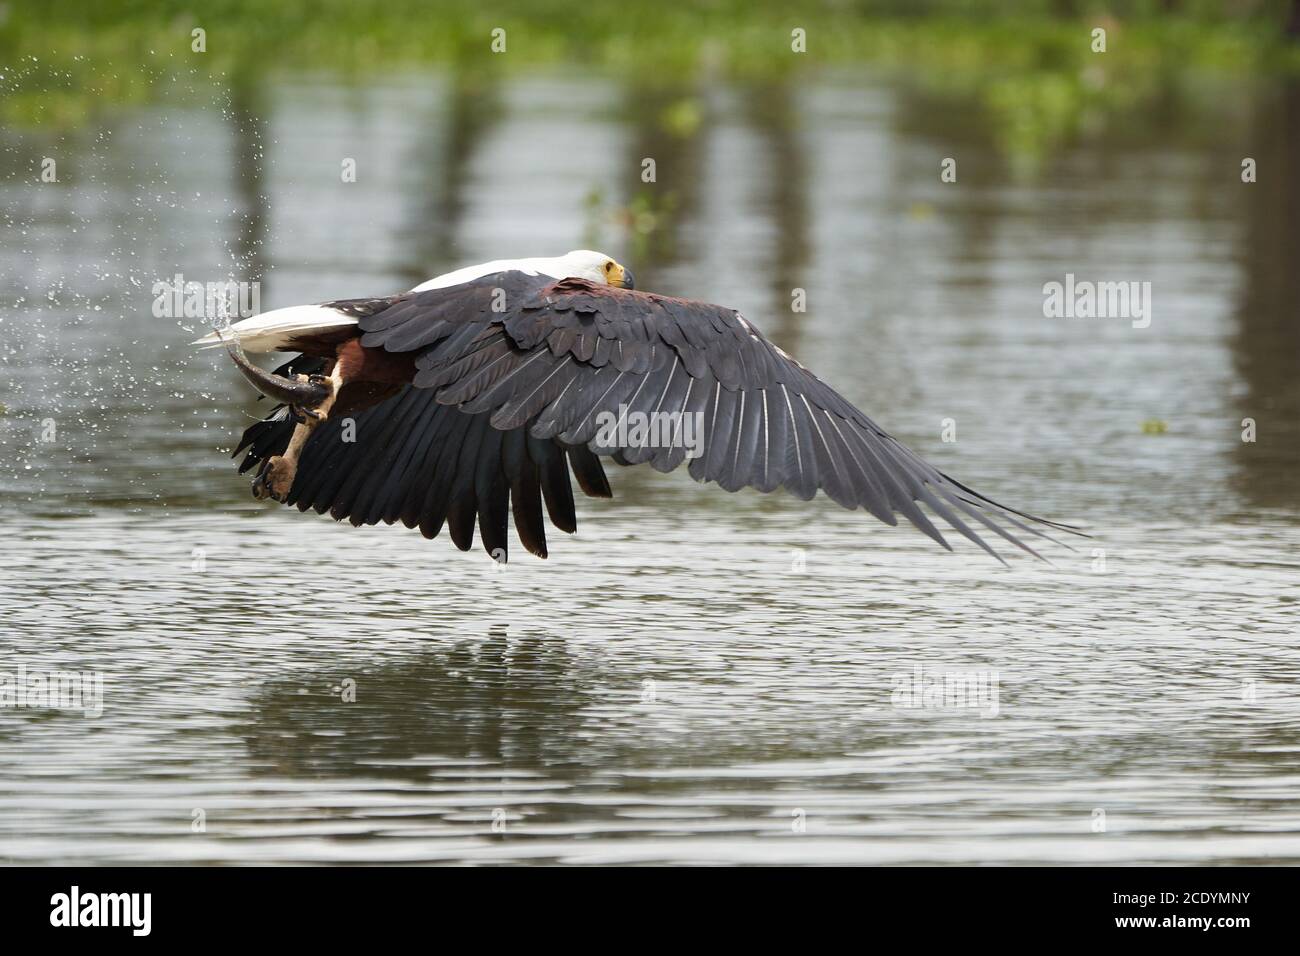 African Fish Sea Eagle Catching Fish Lake Hunting Haliaeetus vocifer Stock Photo